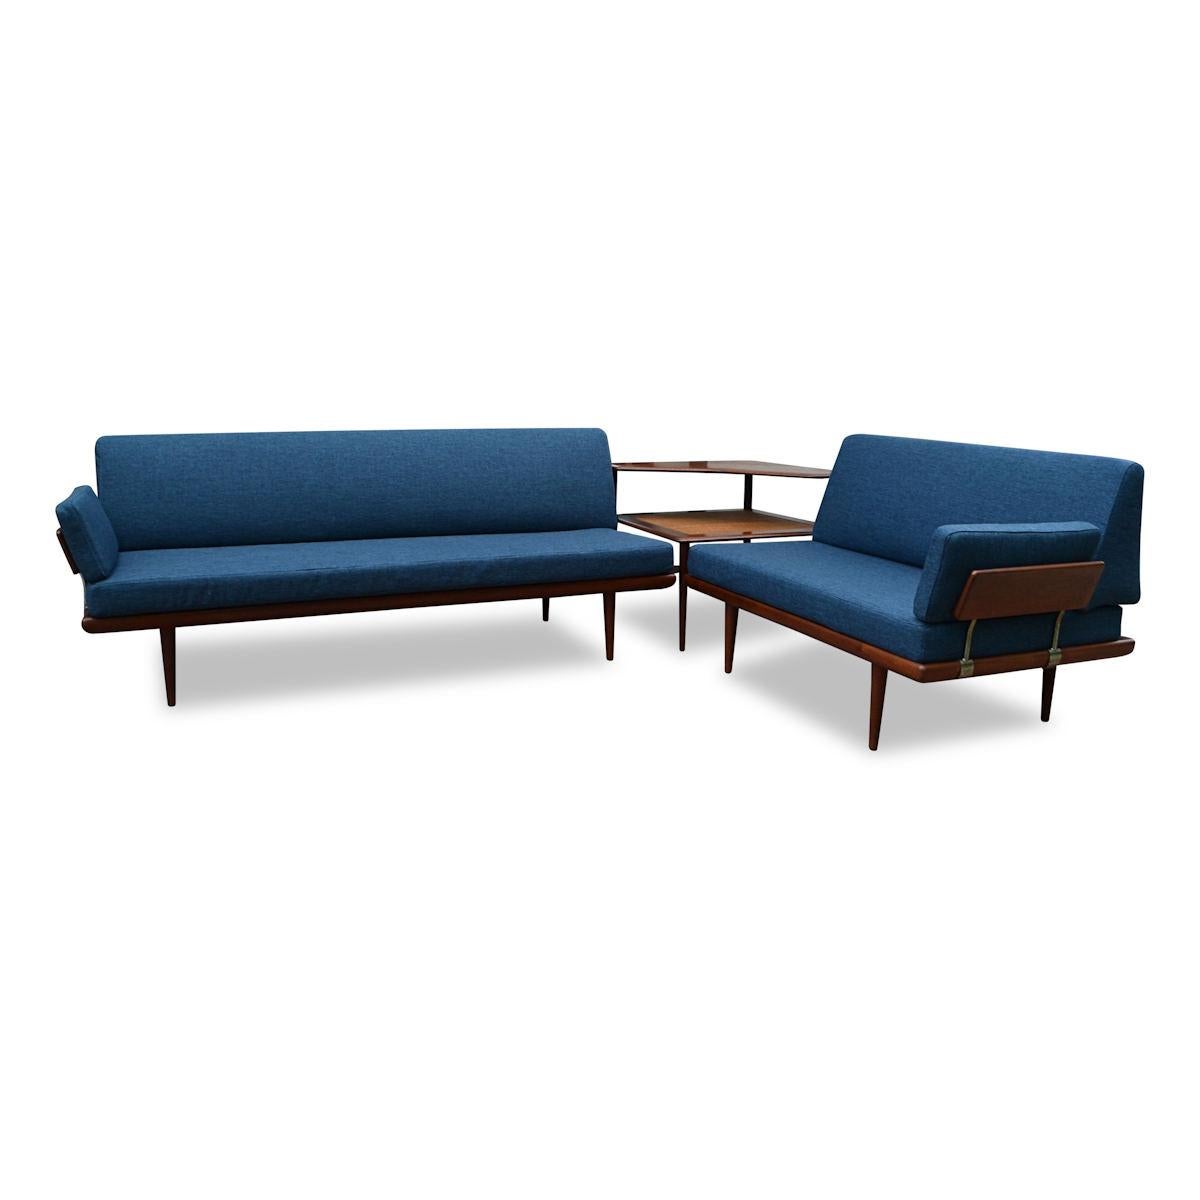 Mid century modern Danish design seating group designed by the famous duo Peter Hvidt & Orla Mølgaard Nielsen for France & Daverkosen during the begin 60's. This model 